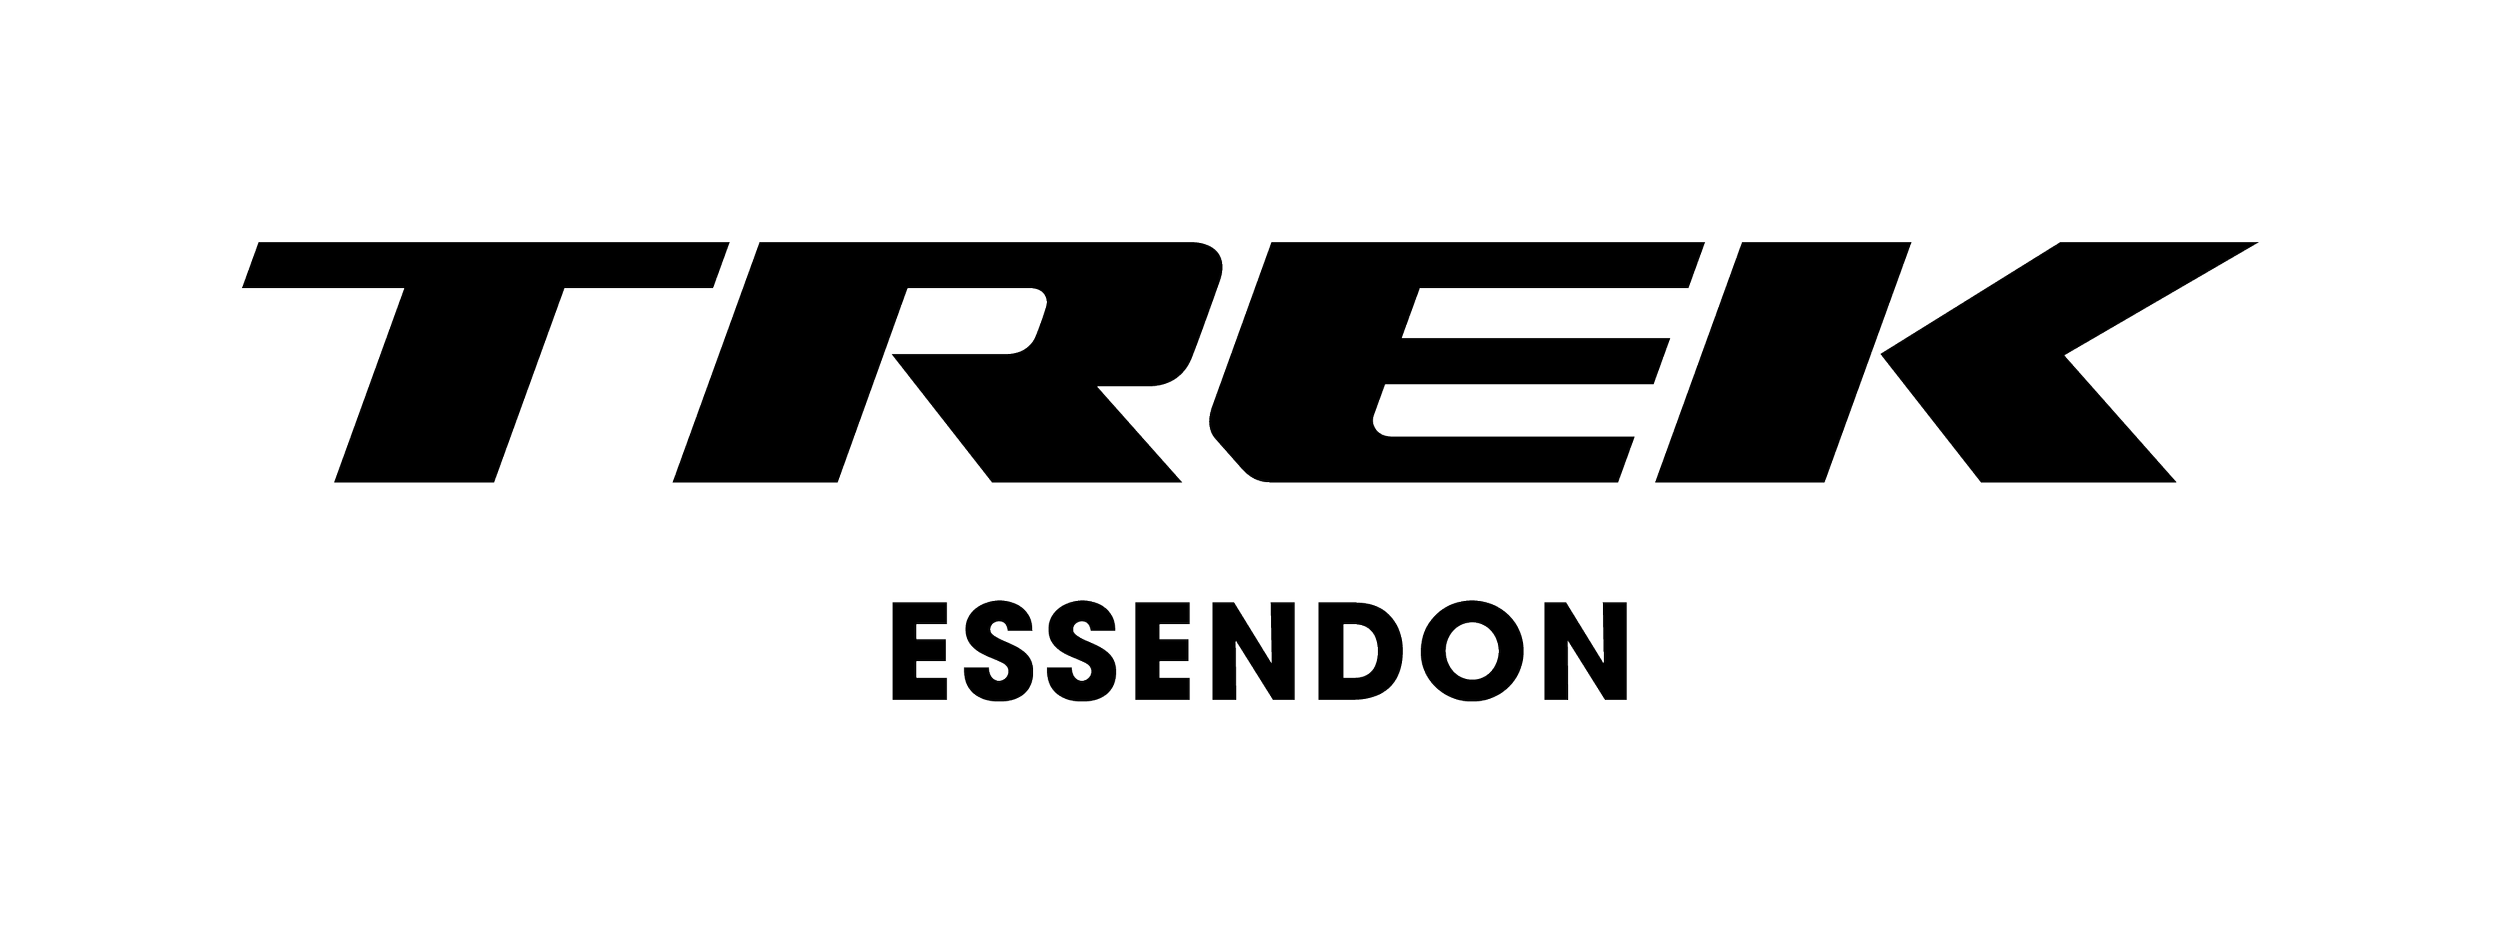 2018_Trek_logo_location_Essendon_black.png